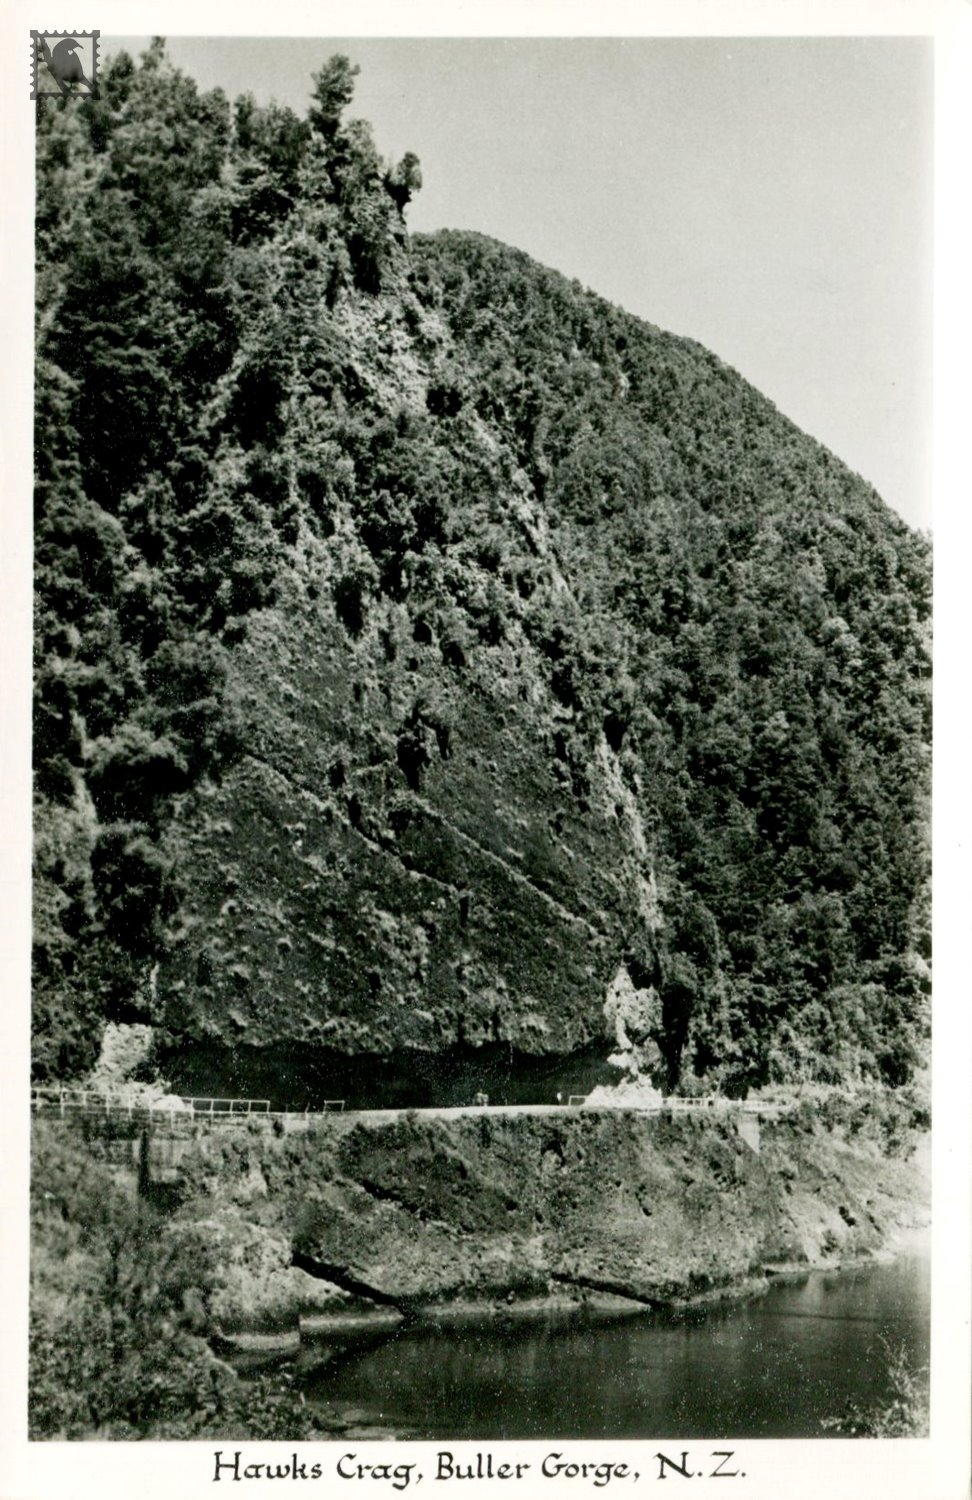 Hawks Crag, Buller Gorge